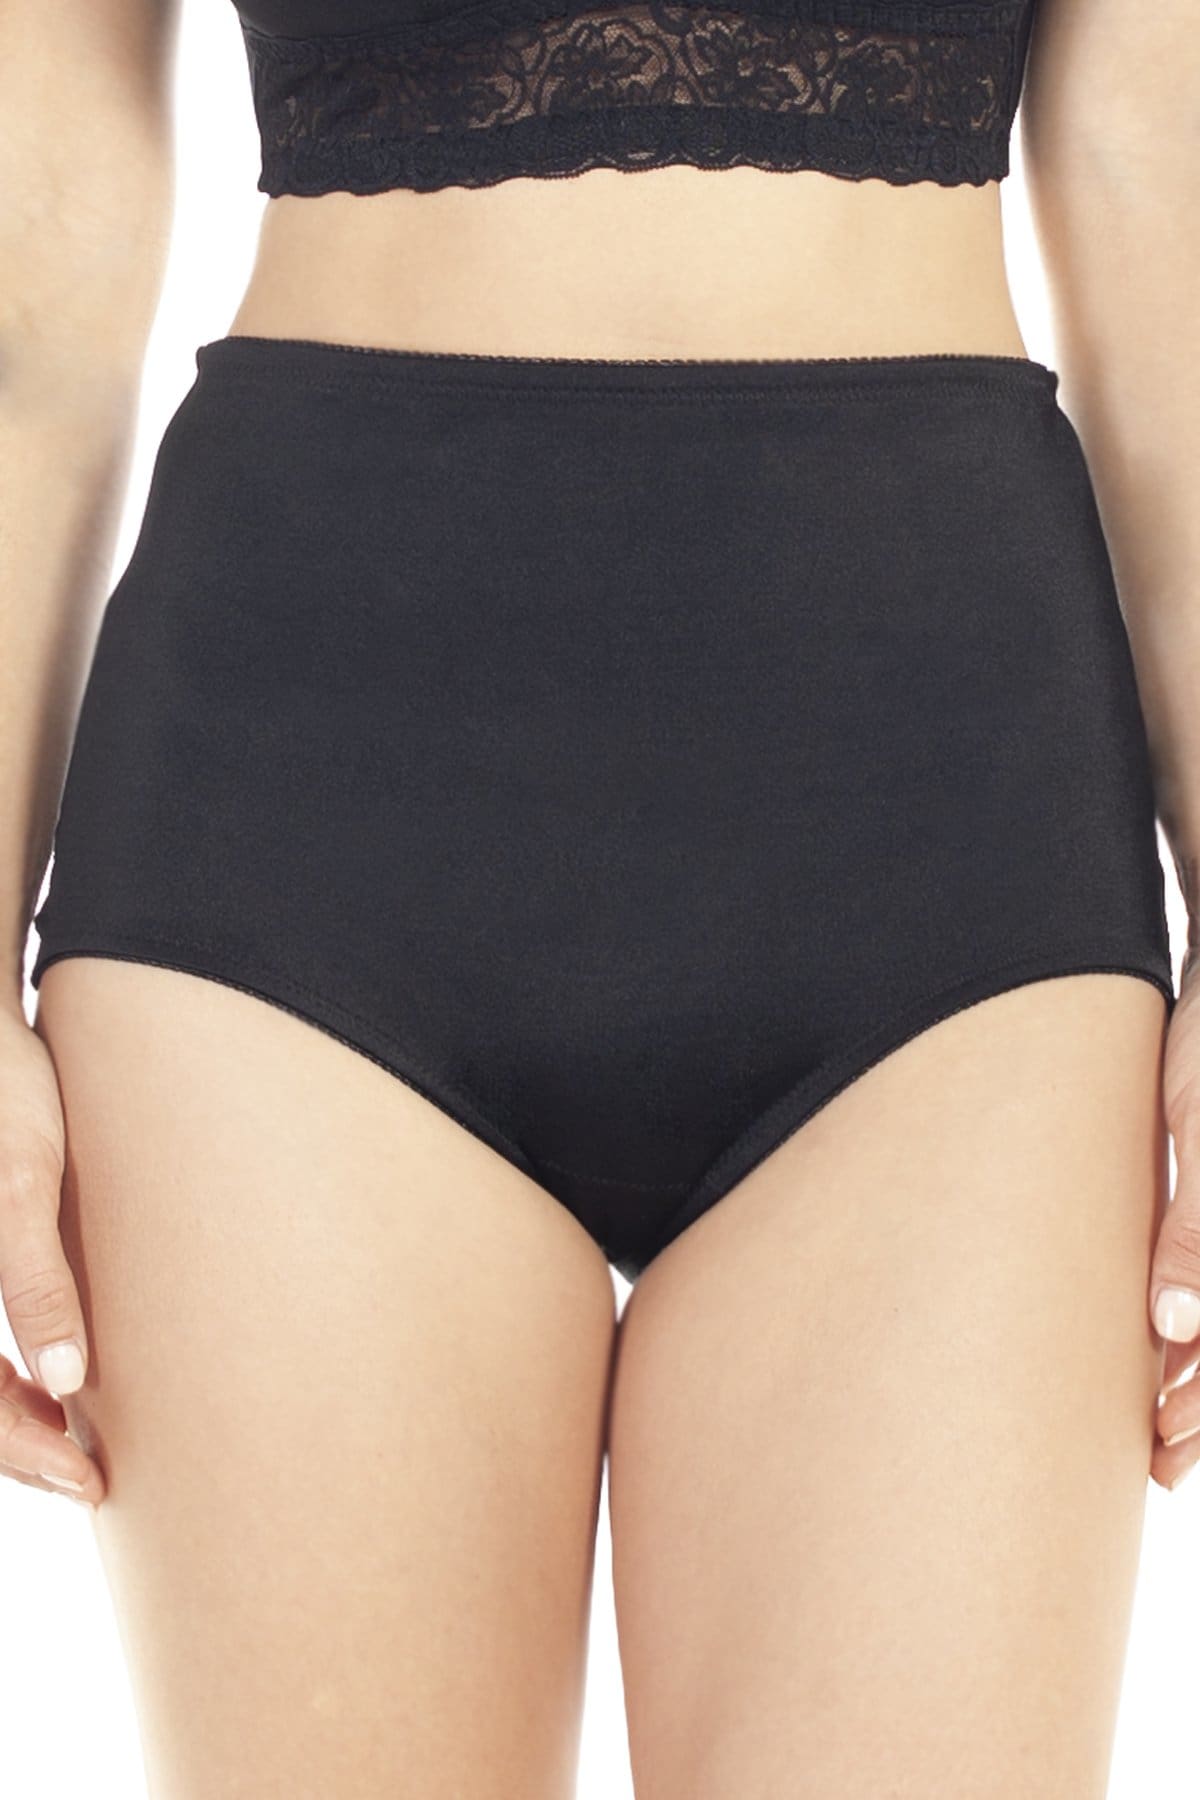 Rhonda Shear Underwear Panty Lace Cheeky Bikini Brief 630924 (Neuturals)~  XL